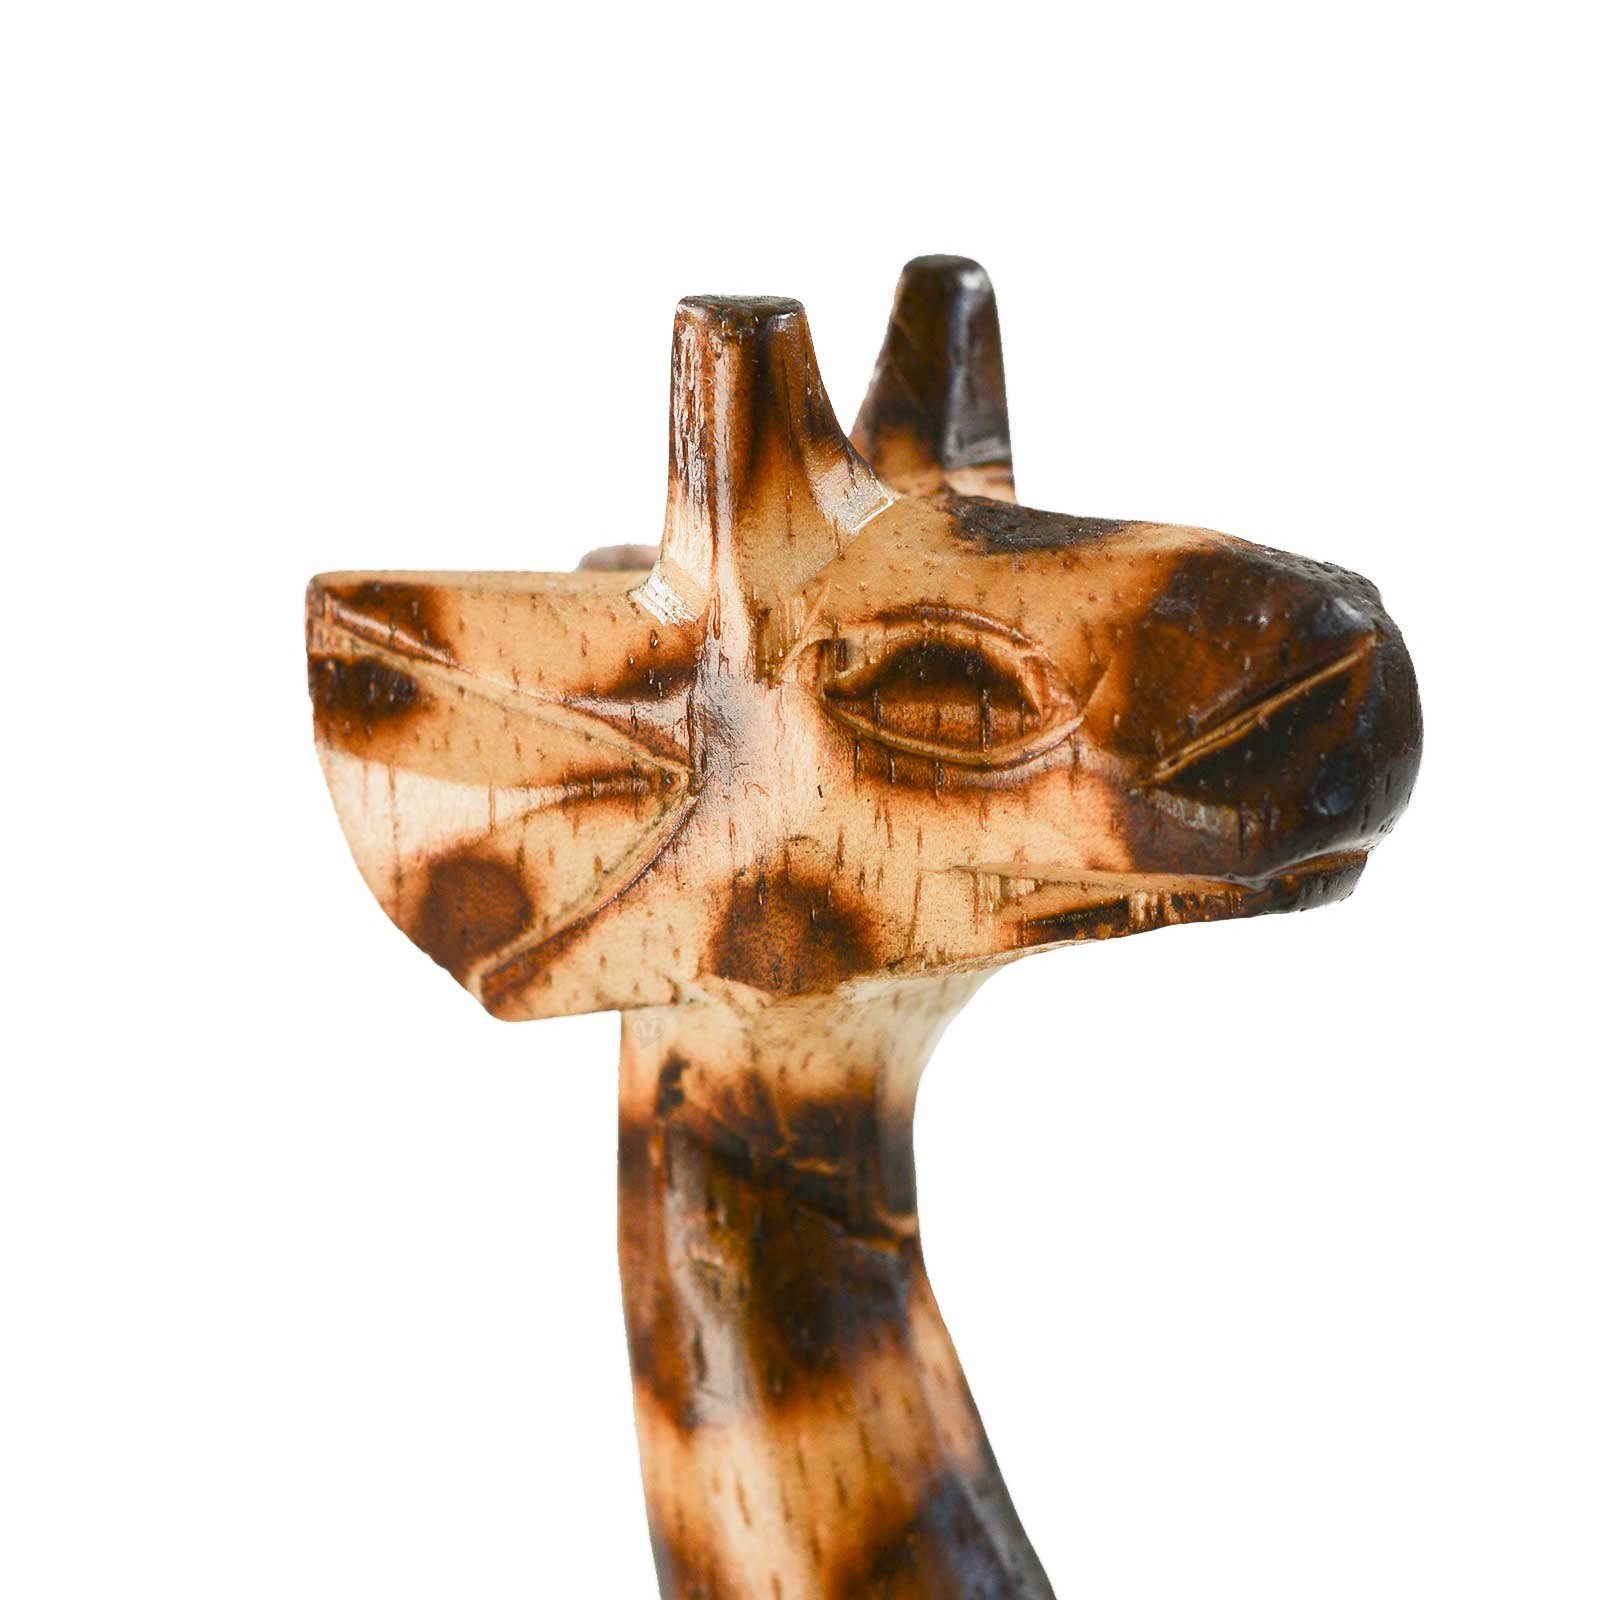 Giraffe maDDma 1 cm 20 20 aus Tierfigur Grösse: Giraffe - ca. cm, Holz, Deko-Giraffe,